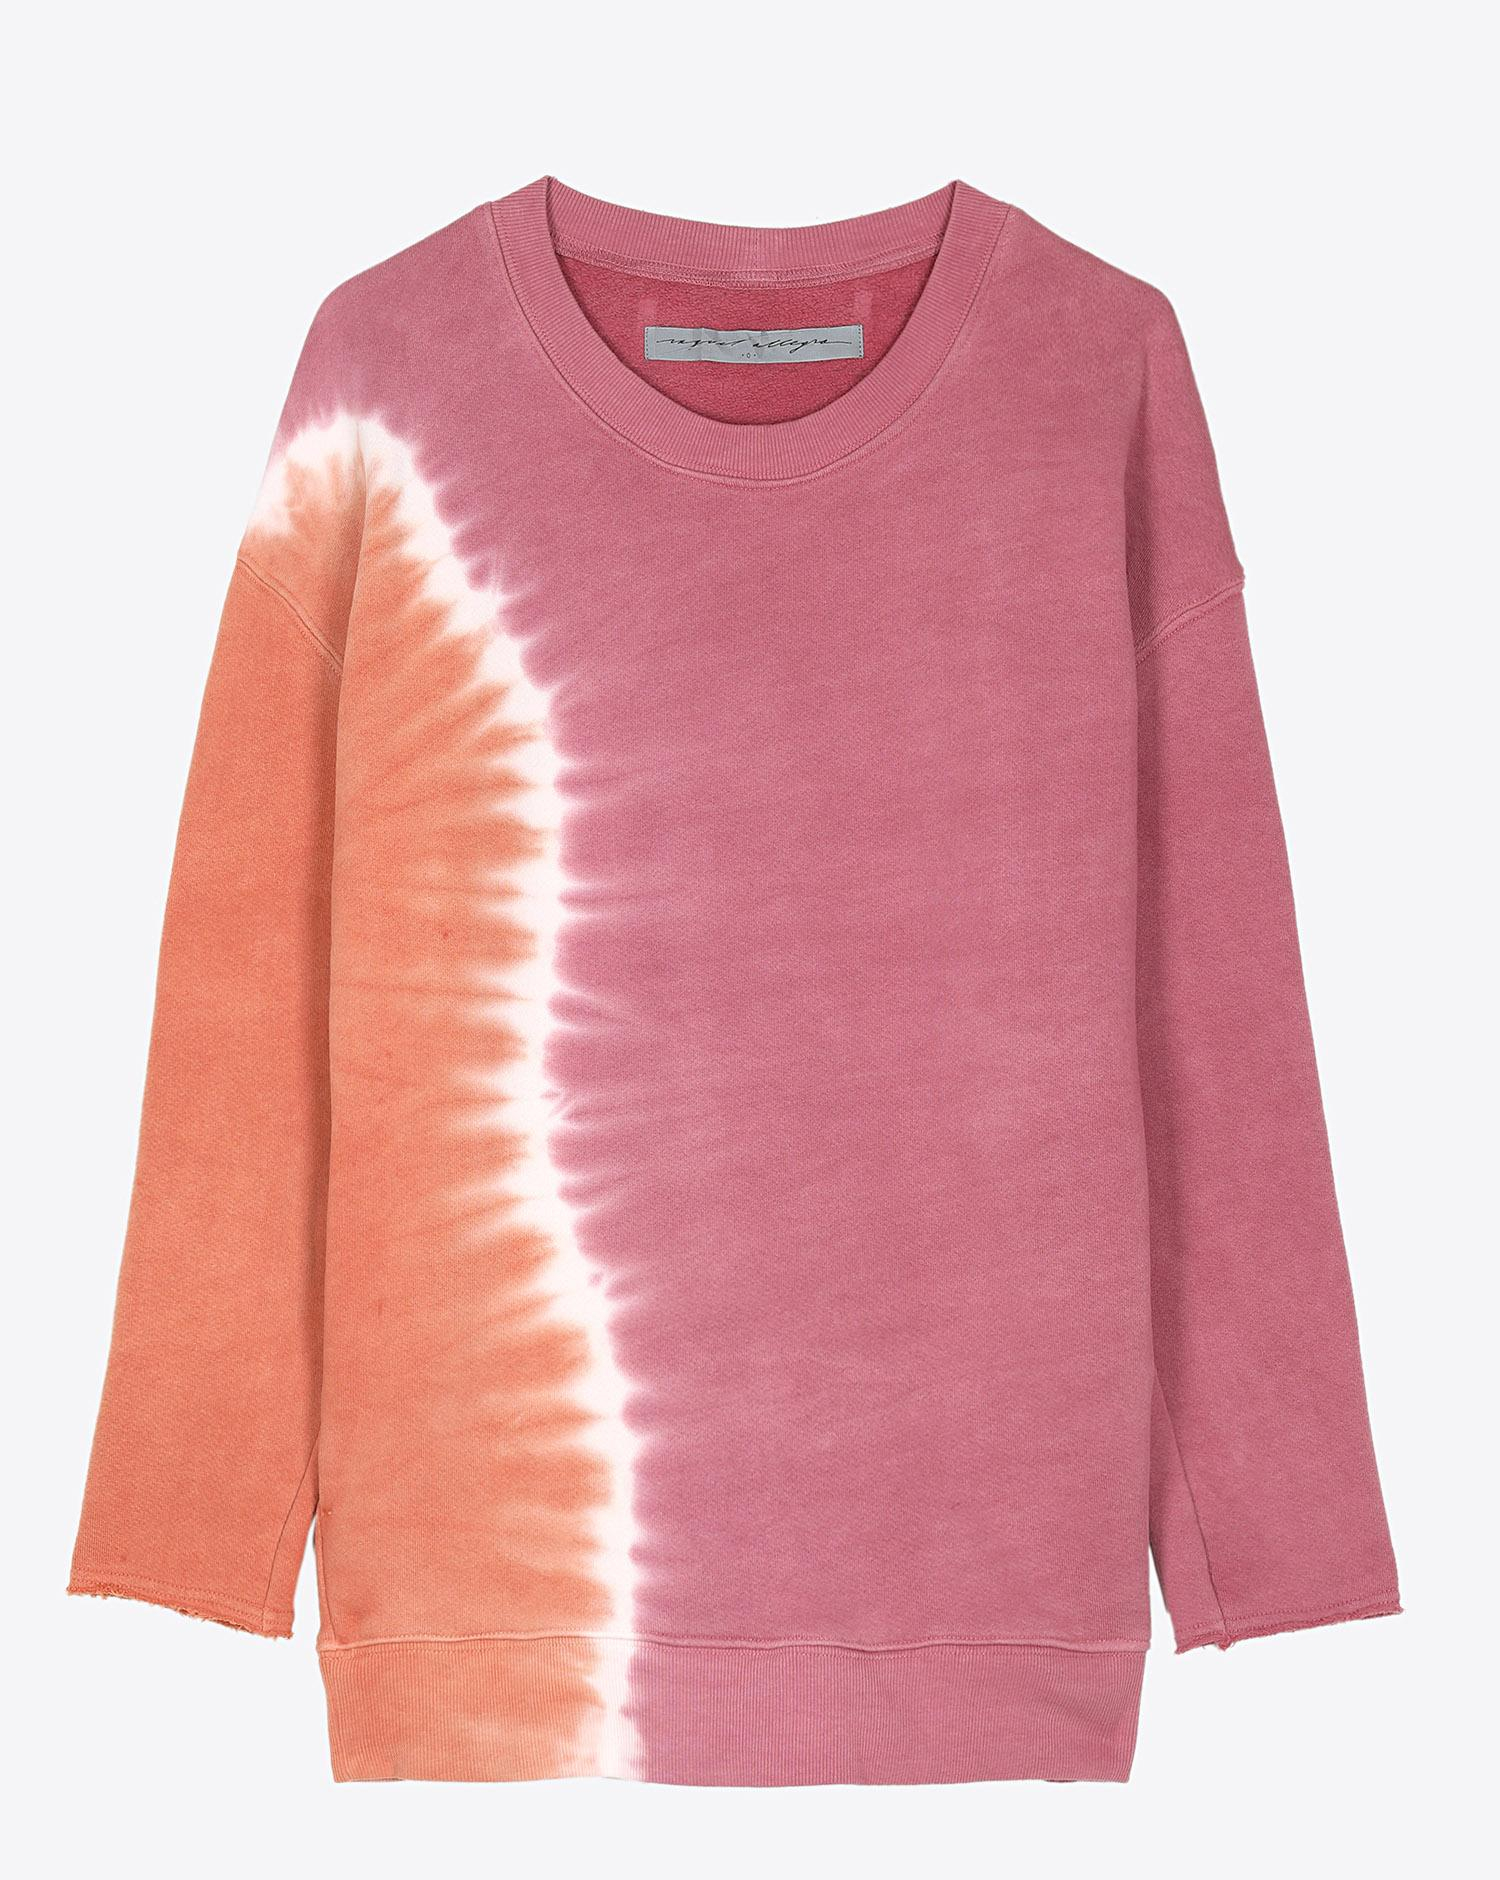 Raquel Allegra Pré-Collection Oversize Sweatshirt - Pink Sunrise  